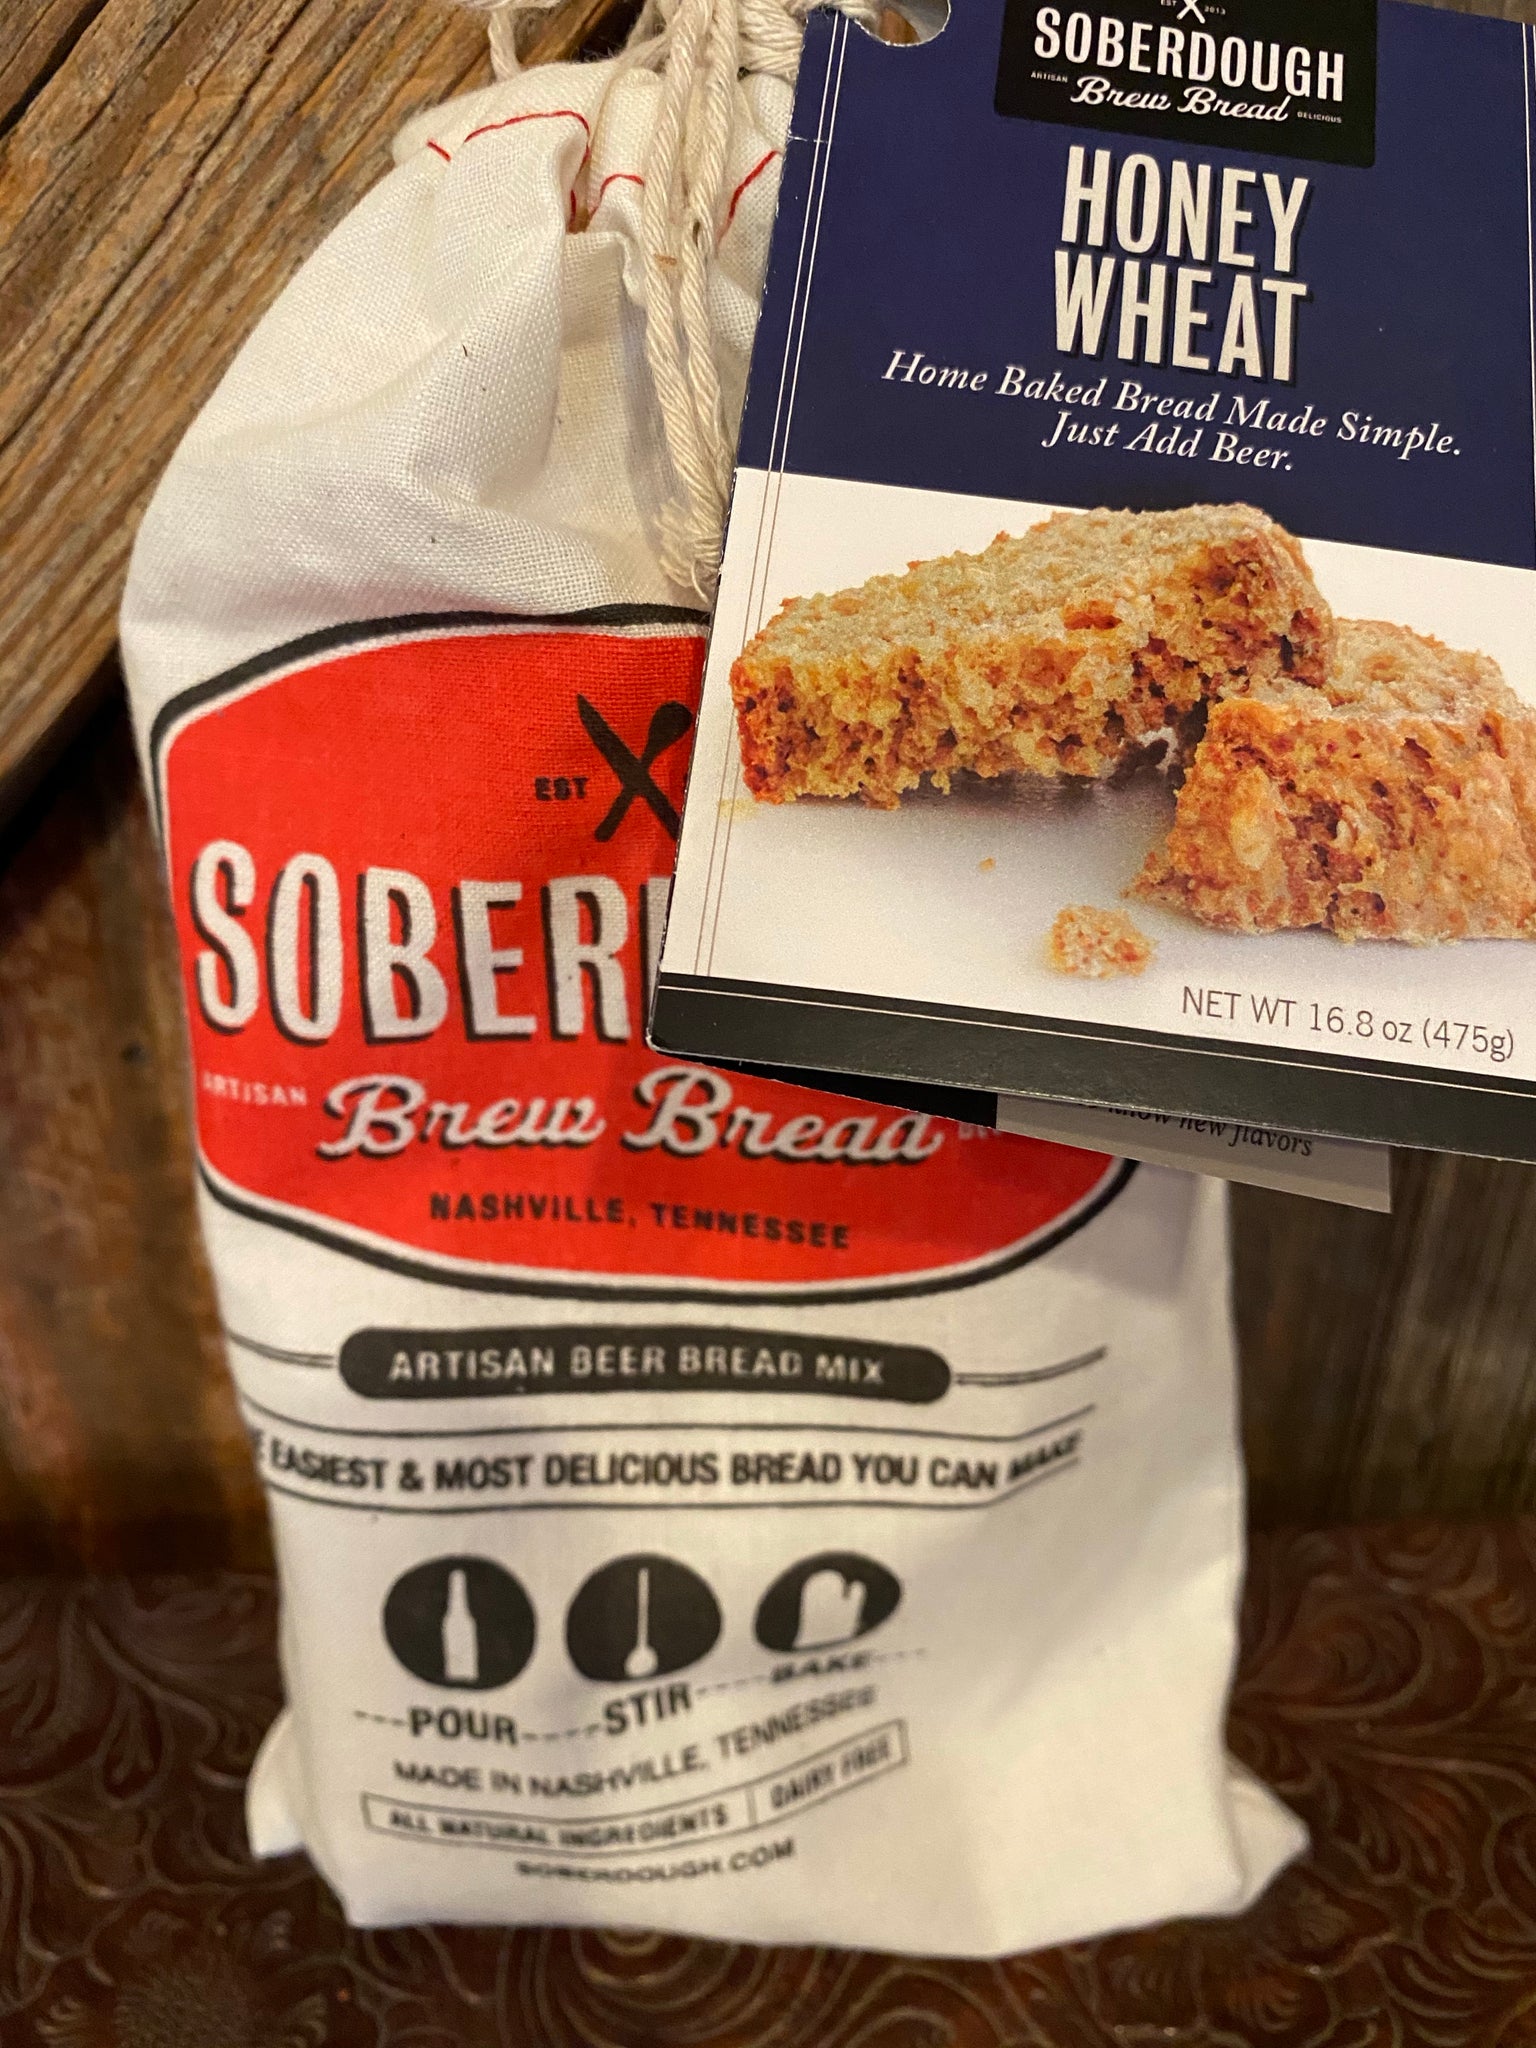 Soberdough Bread Honey Wheat